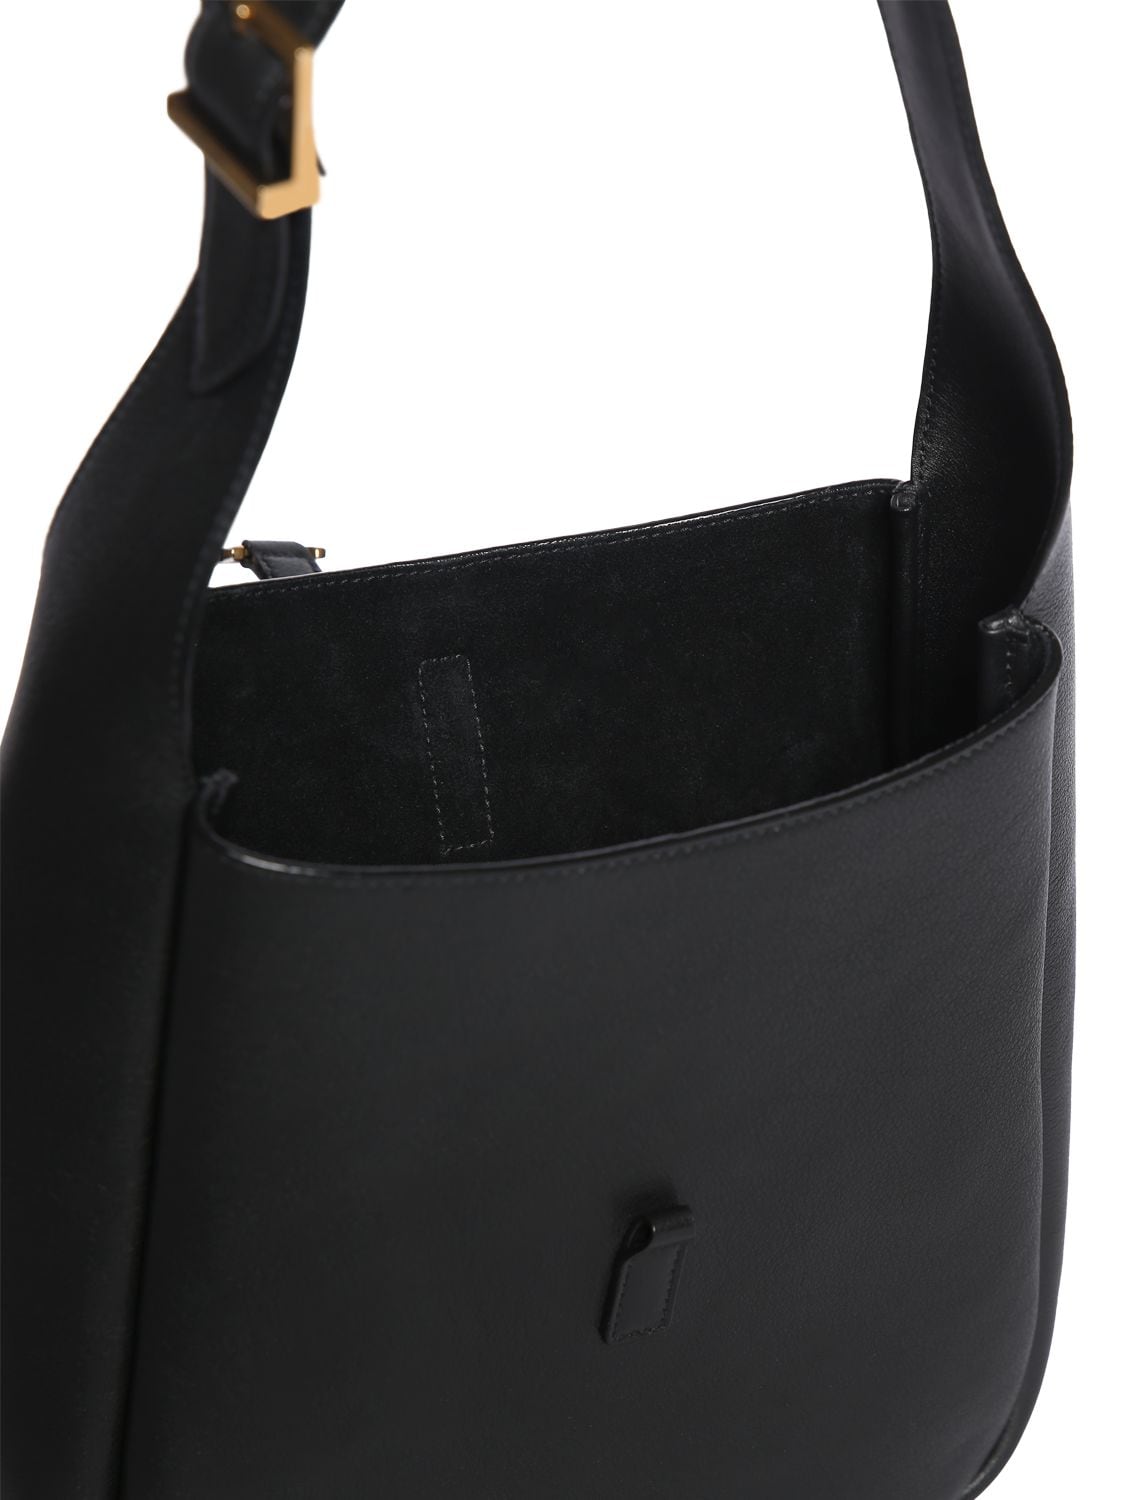 Babylone leather handbag Saint Laurent Black in Leather - 27780039